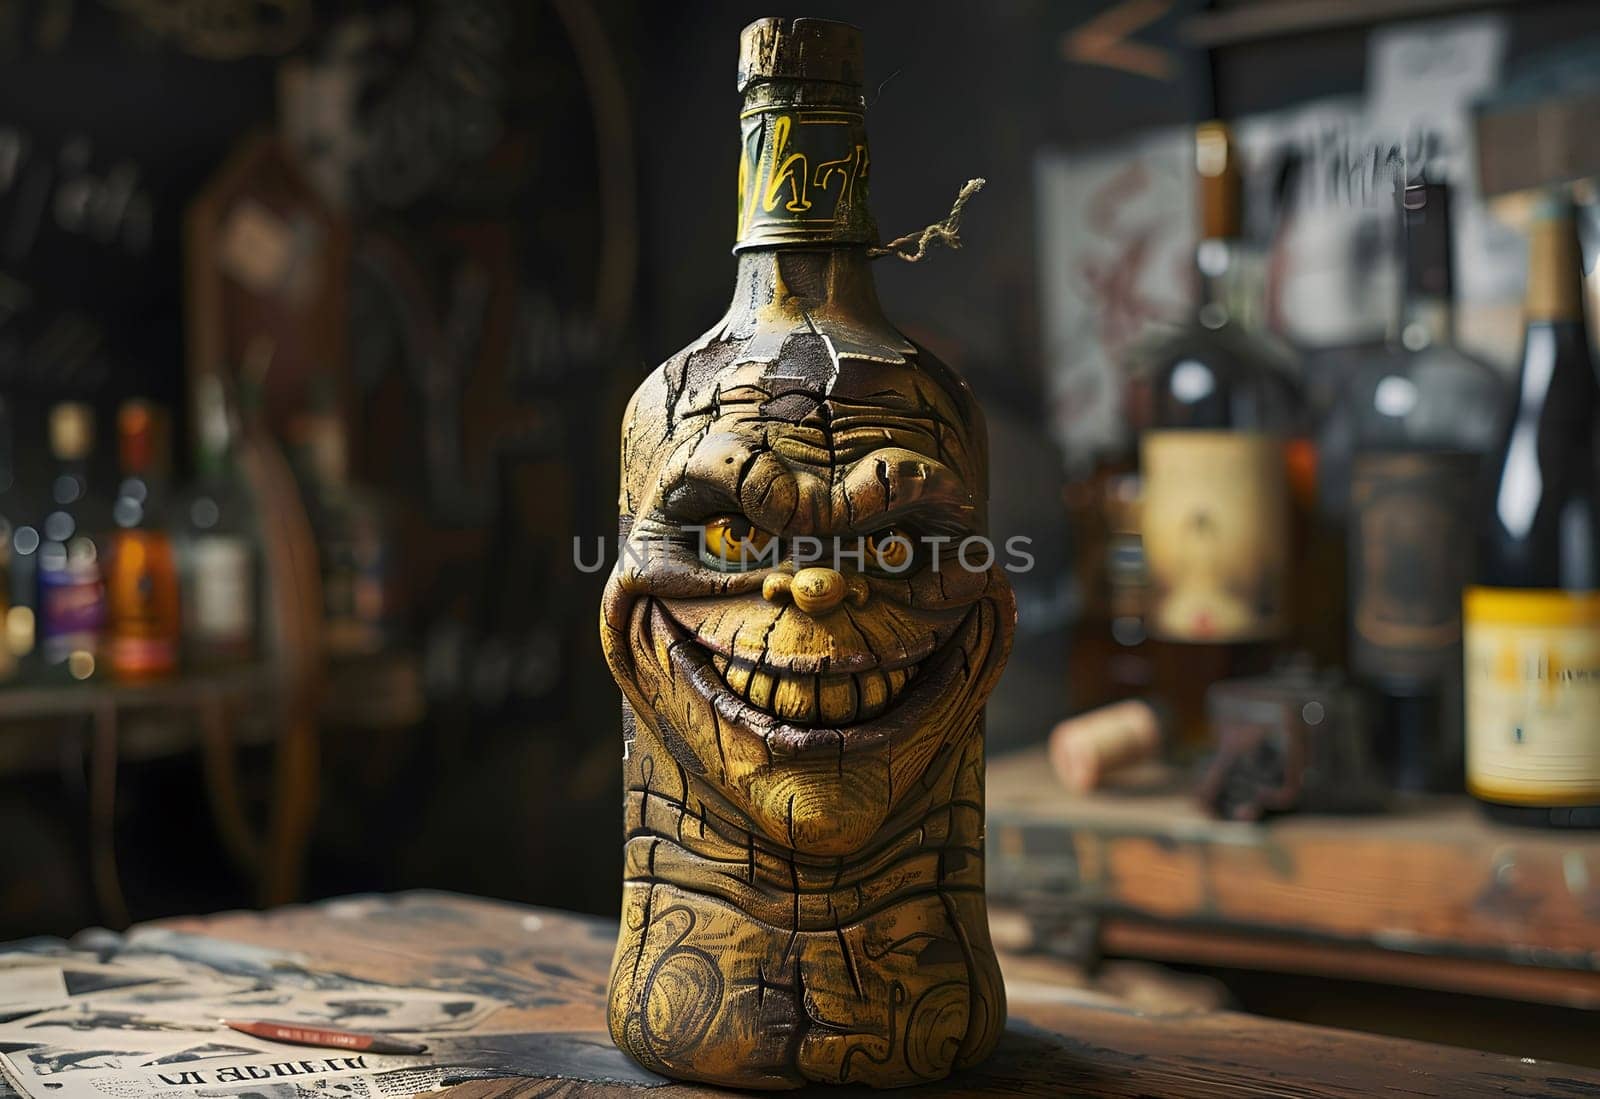 wine bottle that looks like a wooden grinch by Andelov13